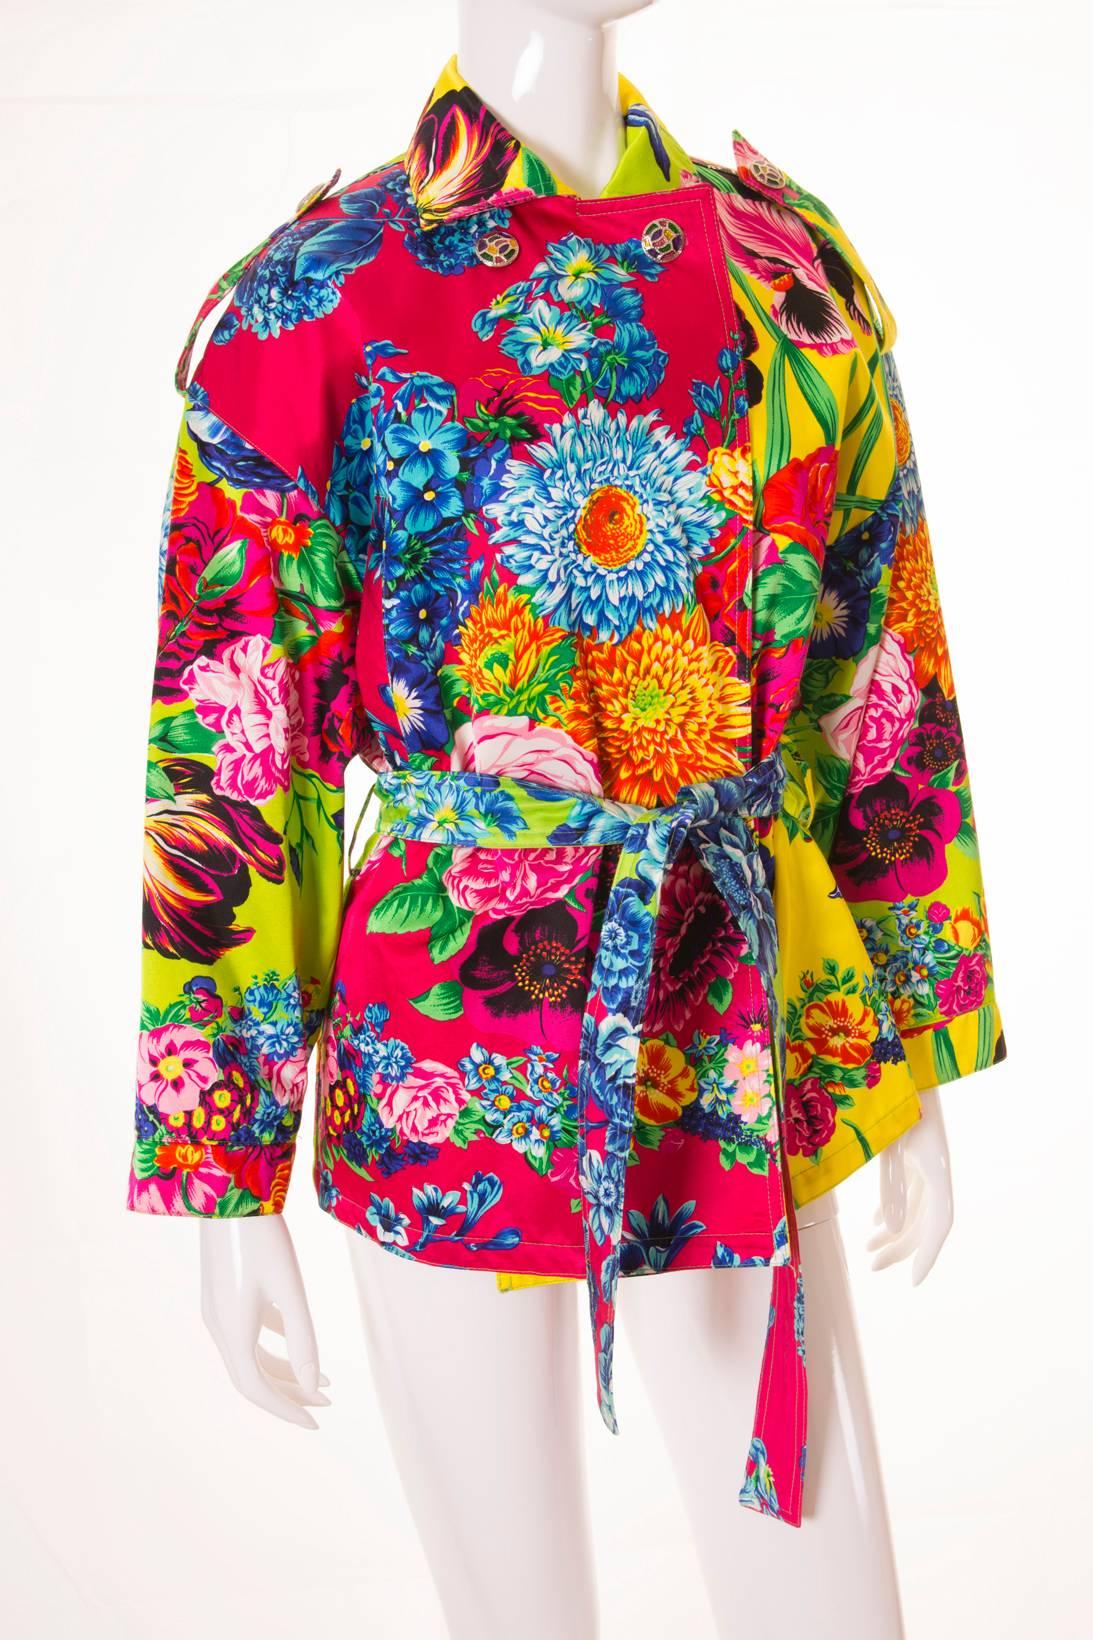 Versus Versace Tropical Floral Print Coat In Excellent Condition In Brunswick West, Victoria